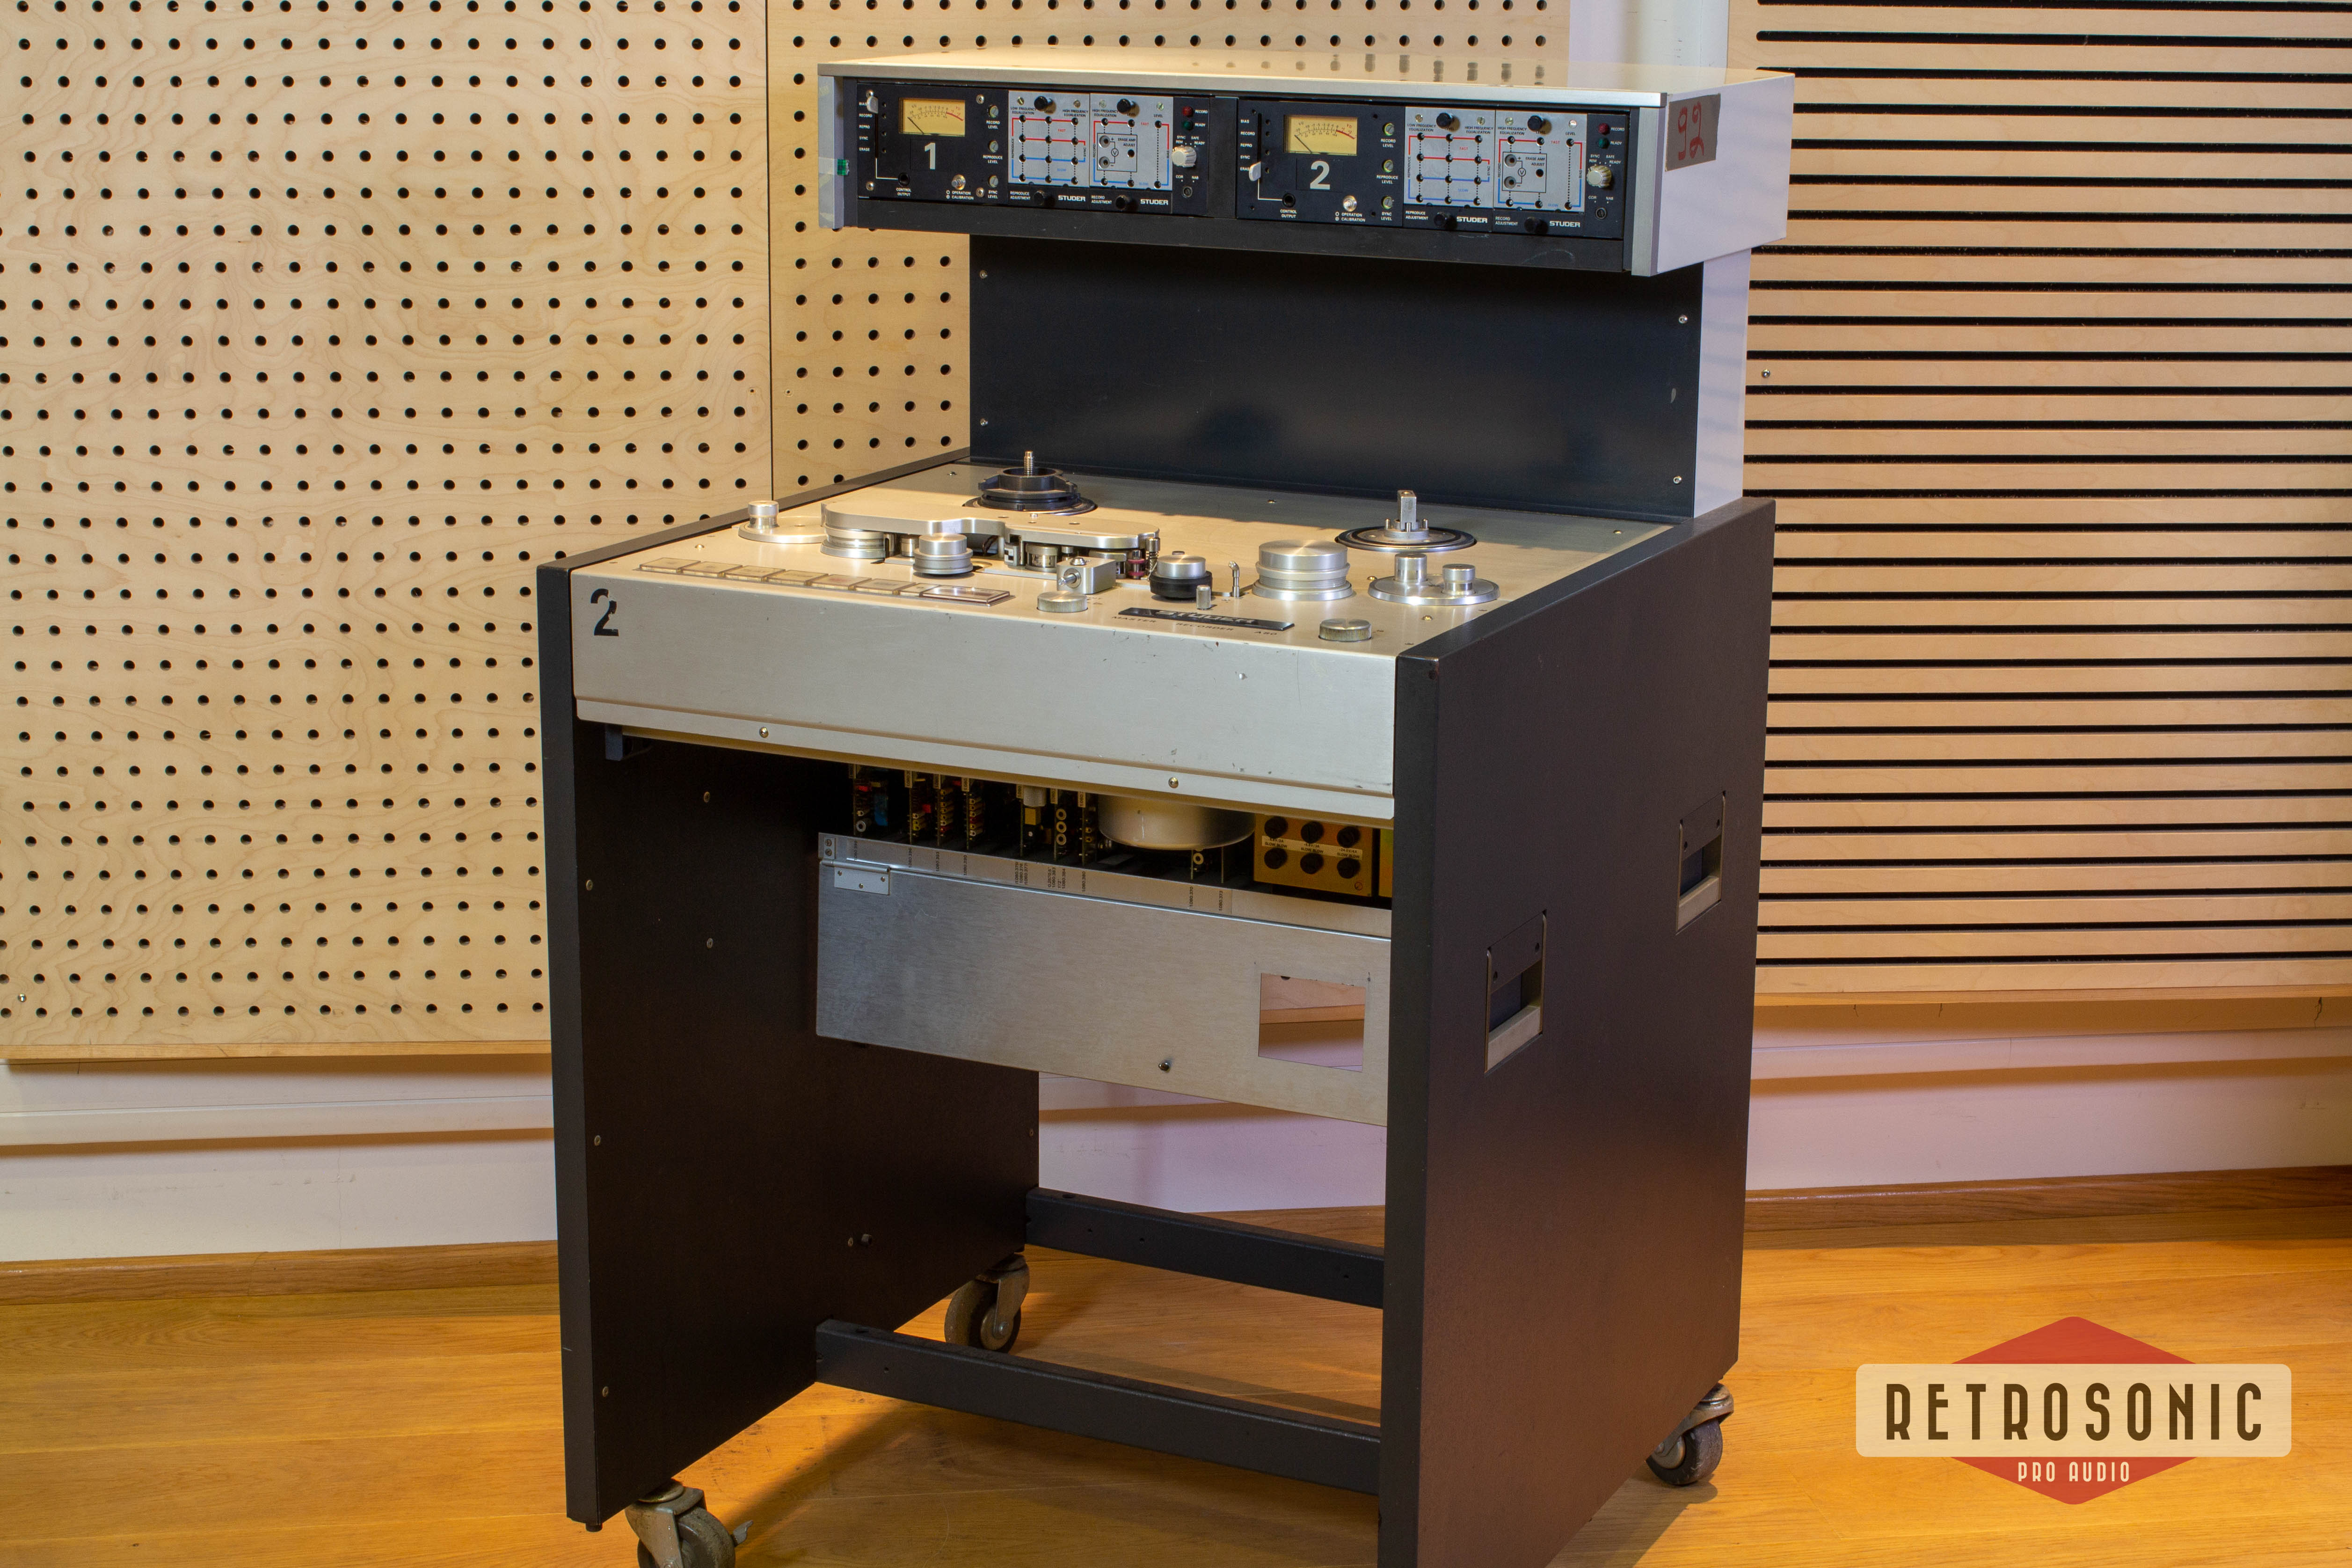 Studer A80 1/4-inch master tape recorder with VU-bridge